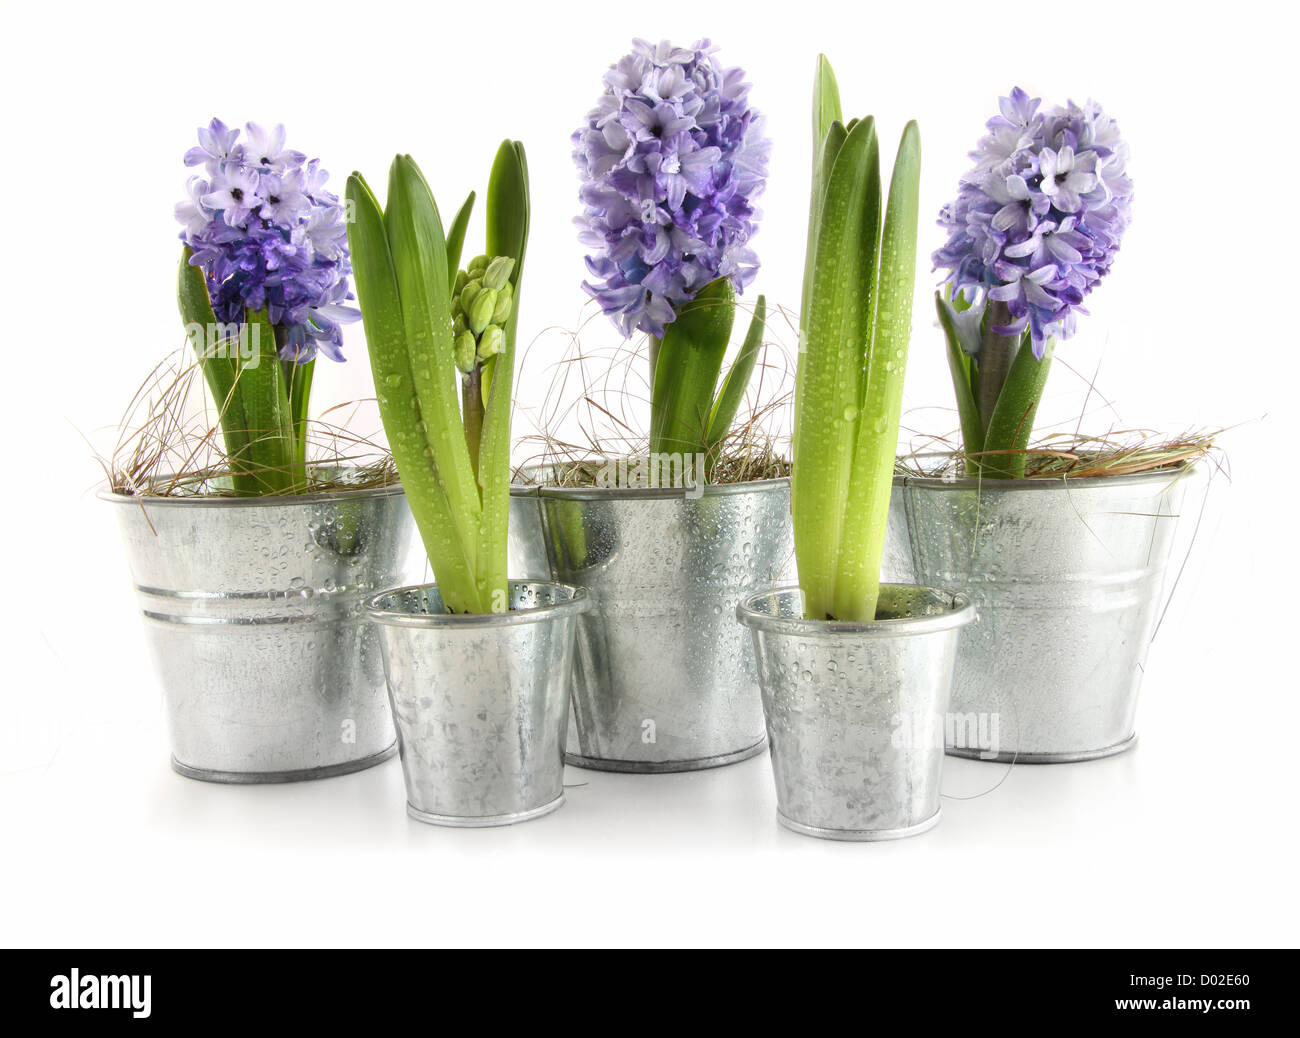 https://c8.alamy.com/comp/D02E60/purple-hyacinth-in-aluminum-pots-on-white-D02E60.jpg